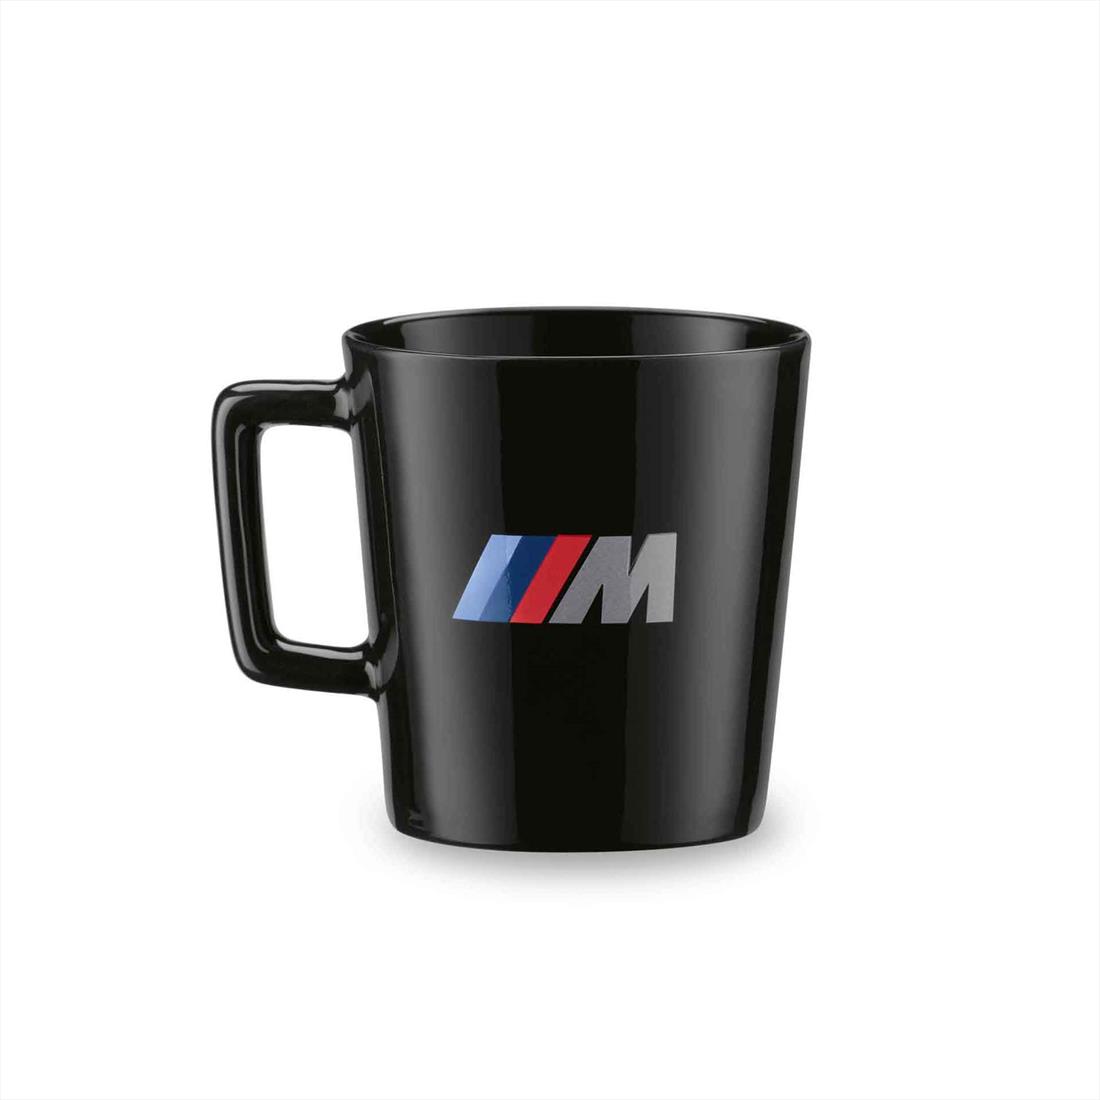 BMW COFFEE MUG ORIGINAL BMW COLLECTION